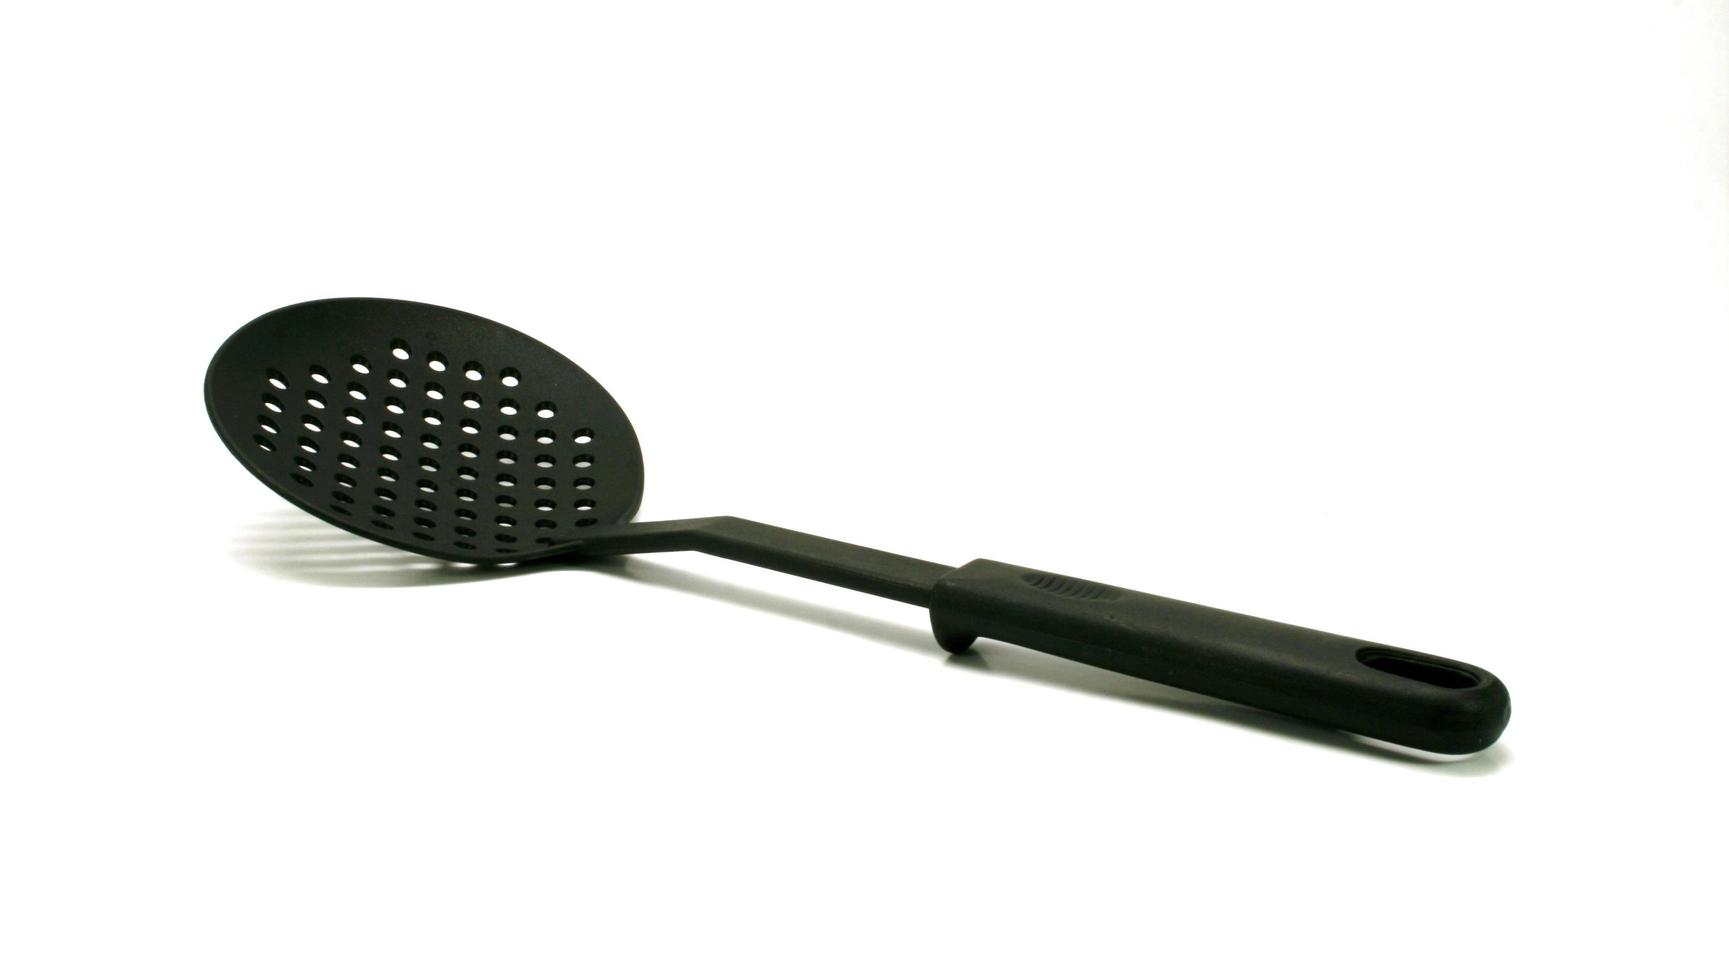 Plastic spatula on white photo